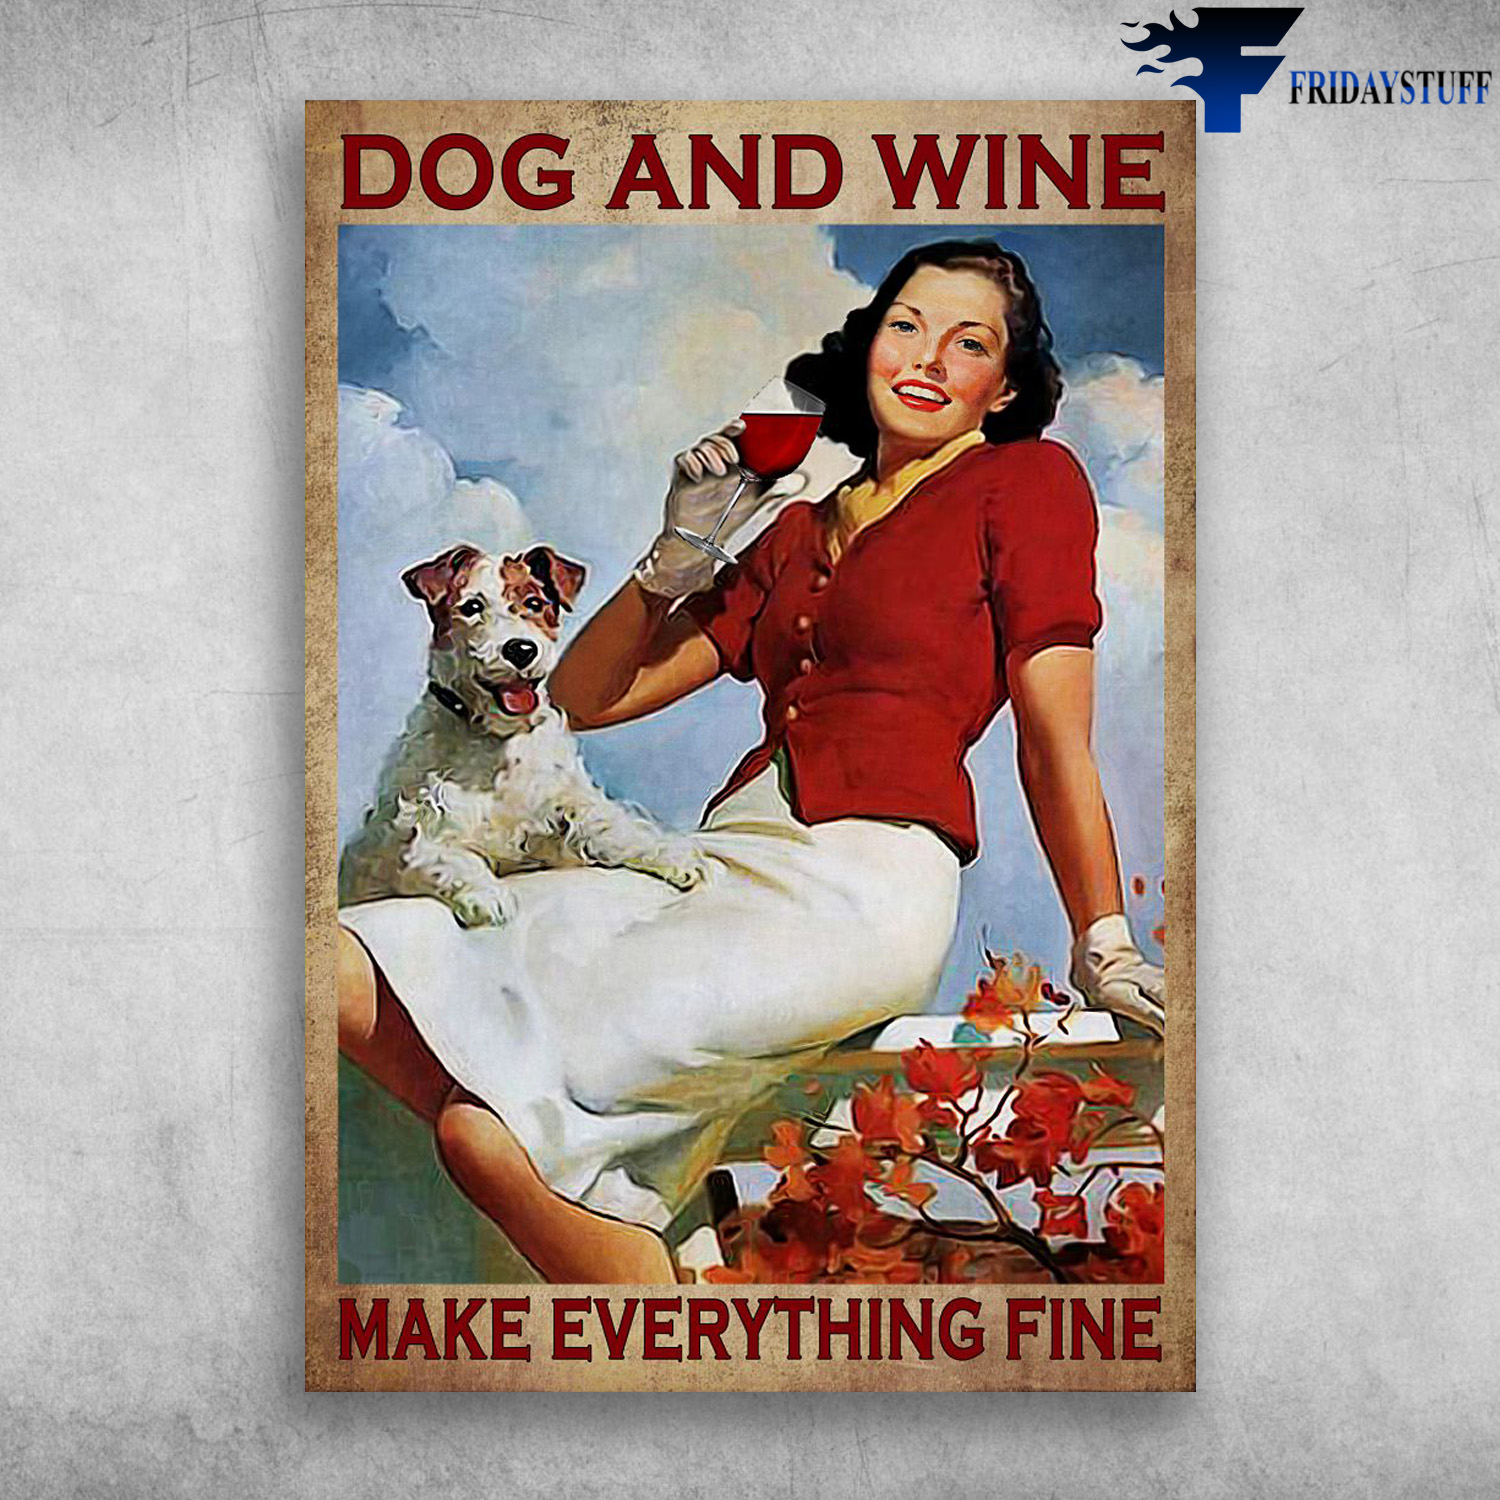 Girl Loves Dog And Wine - Dog And Wine, Make Everything Fine, Dog Lover, Wine Girl